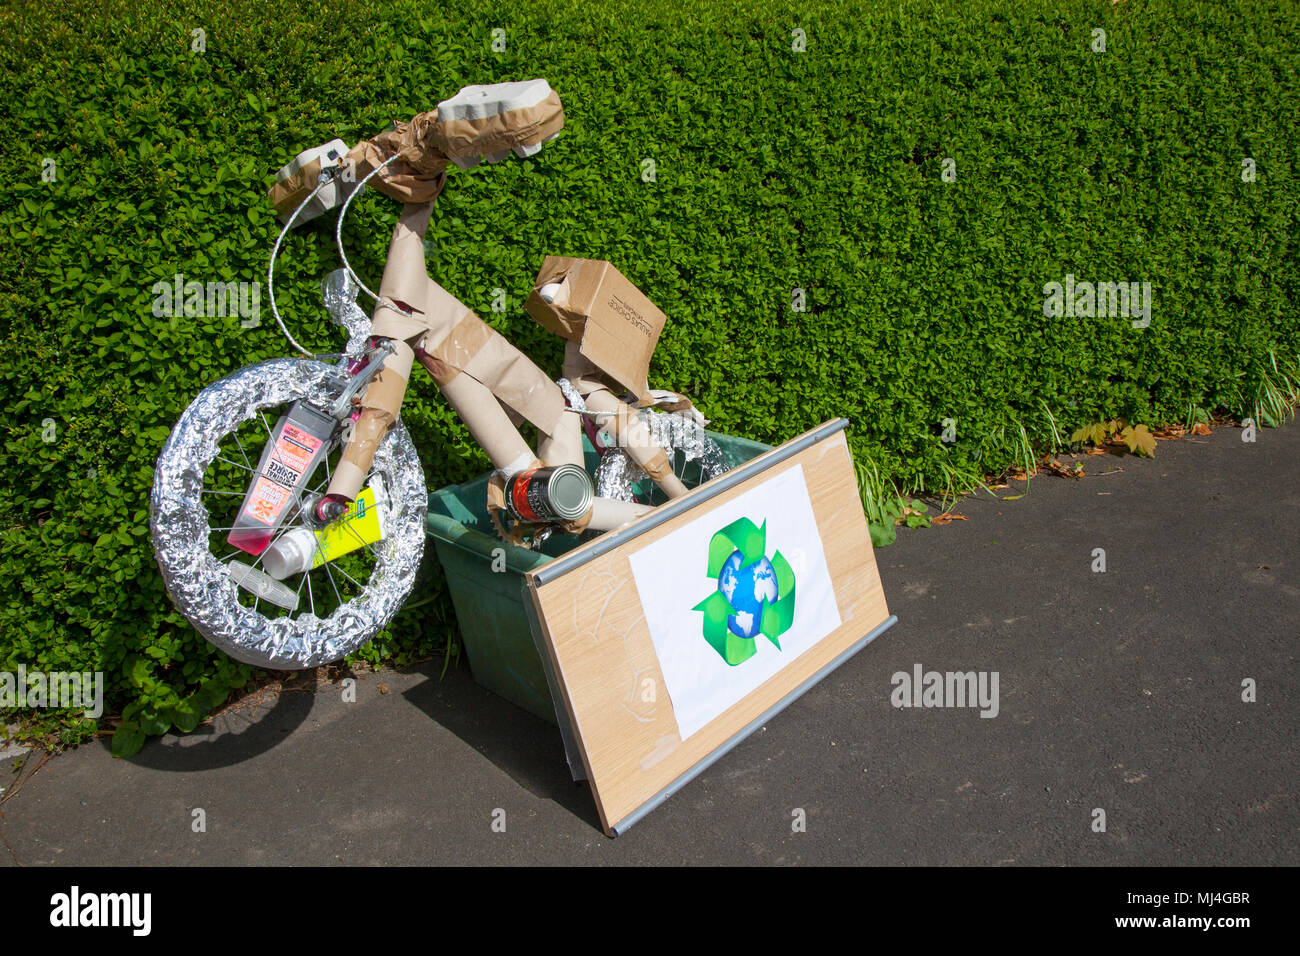 Wrapped present bike -Fotos und -Bildmaterial in hoher Auflösung – Alamy